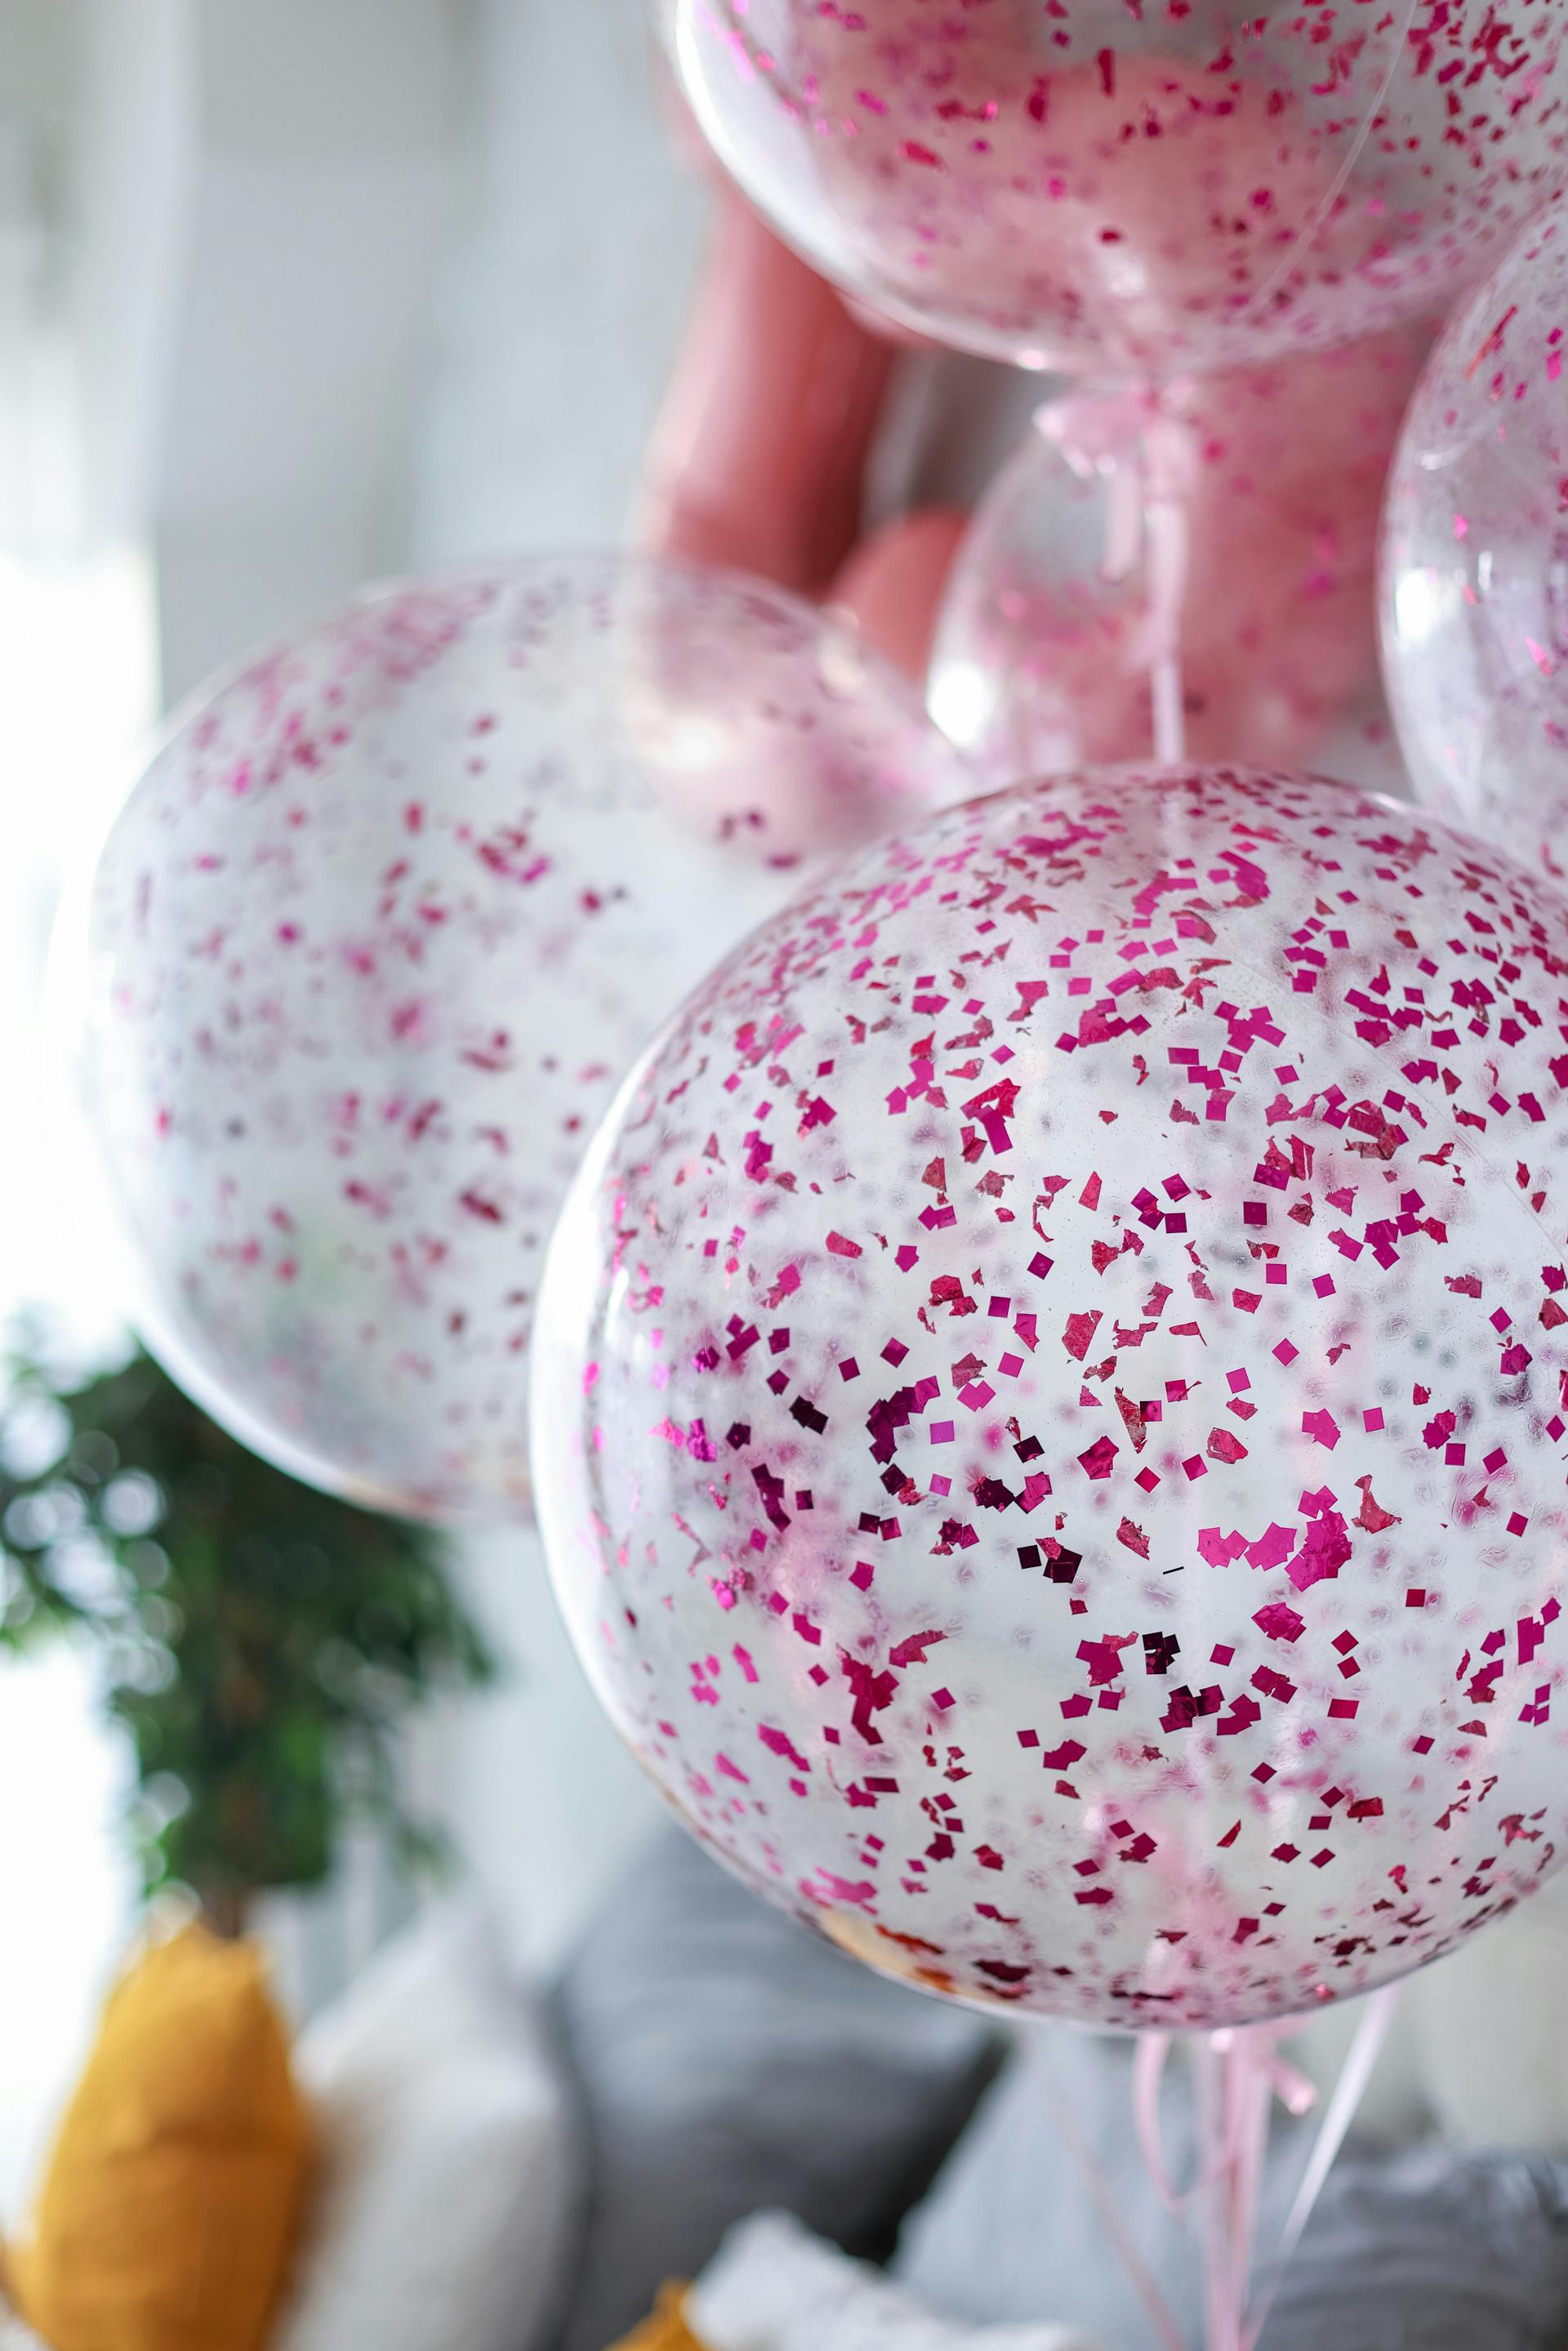 Pink glitter balloons | Source: Pexels